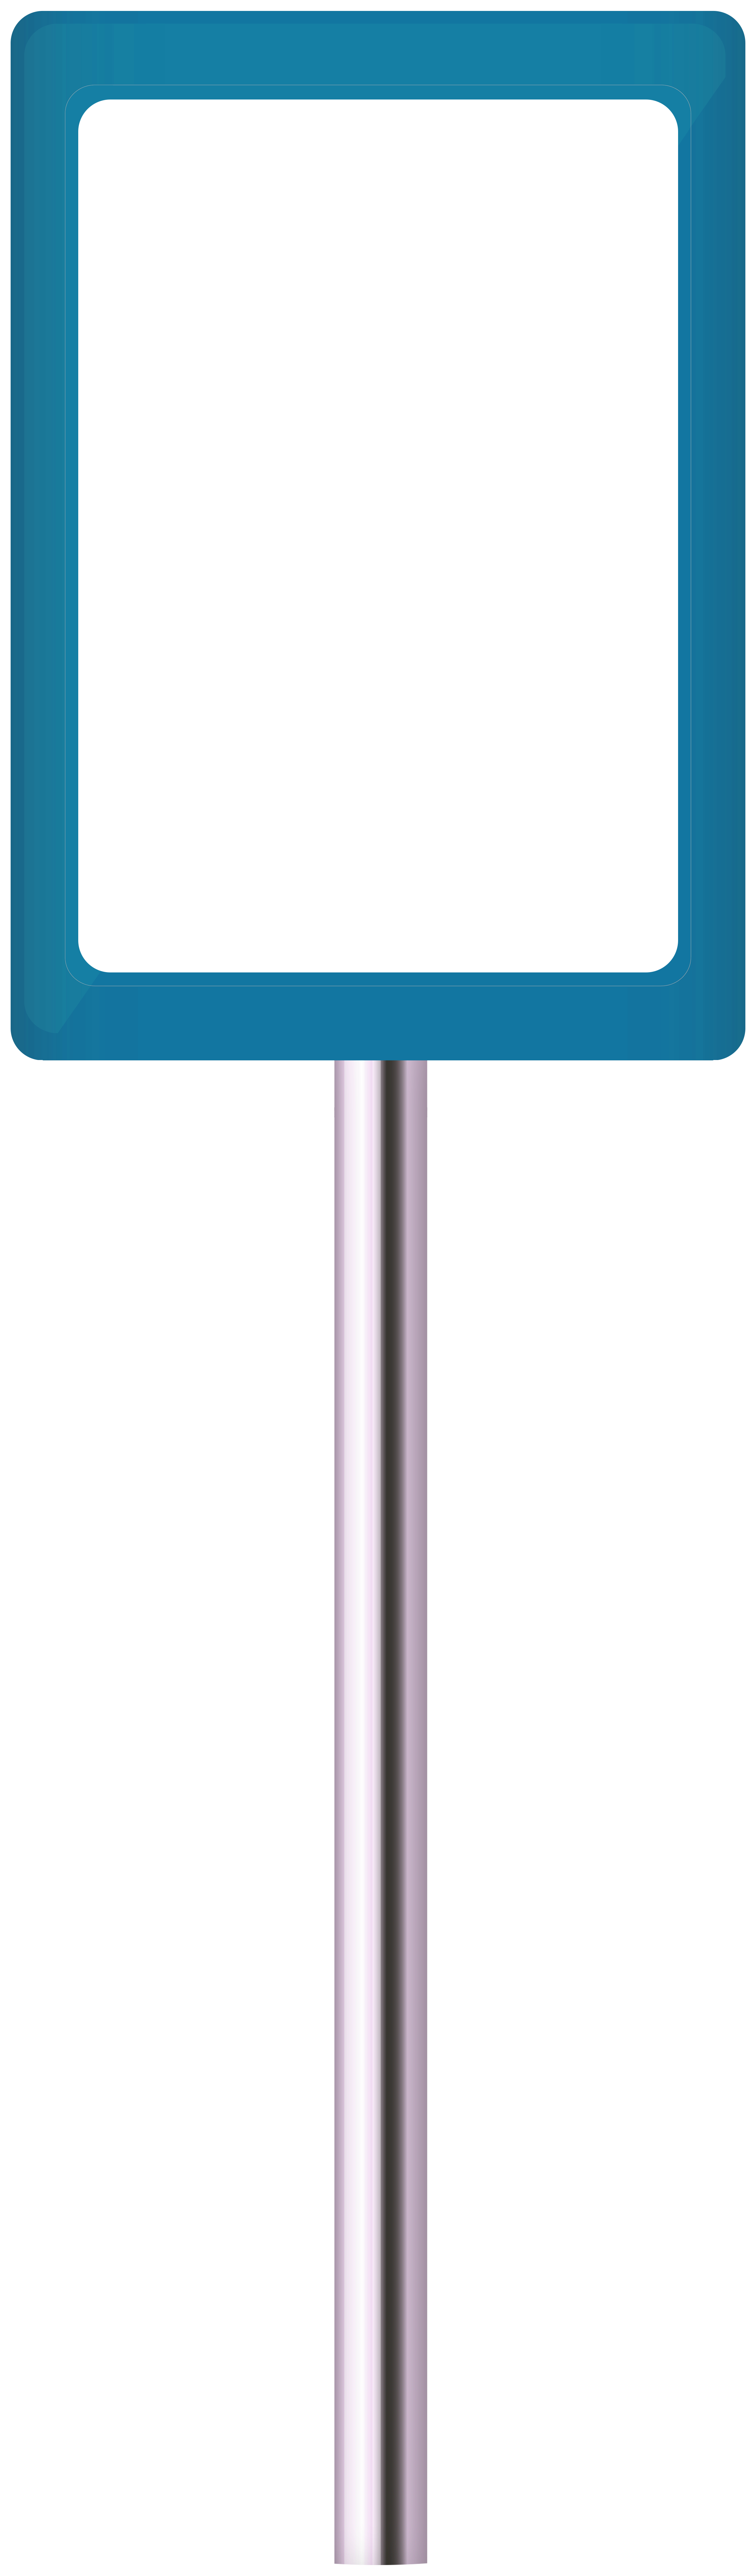 blank blue street sign